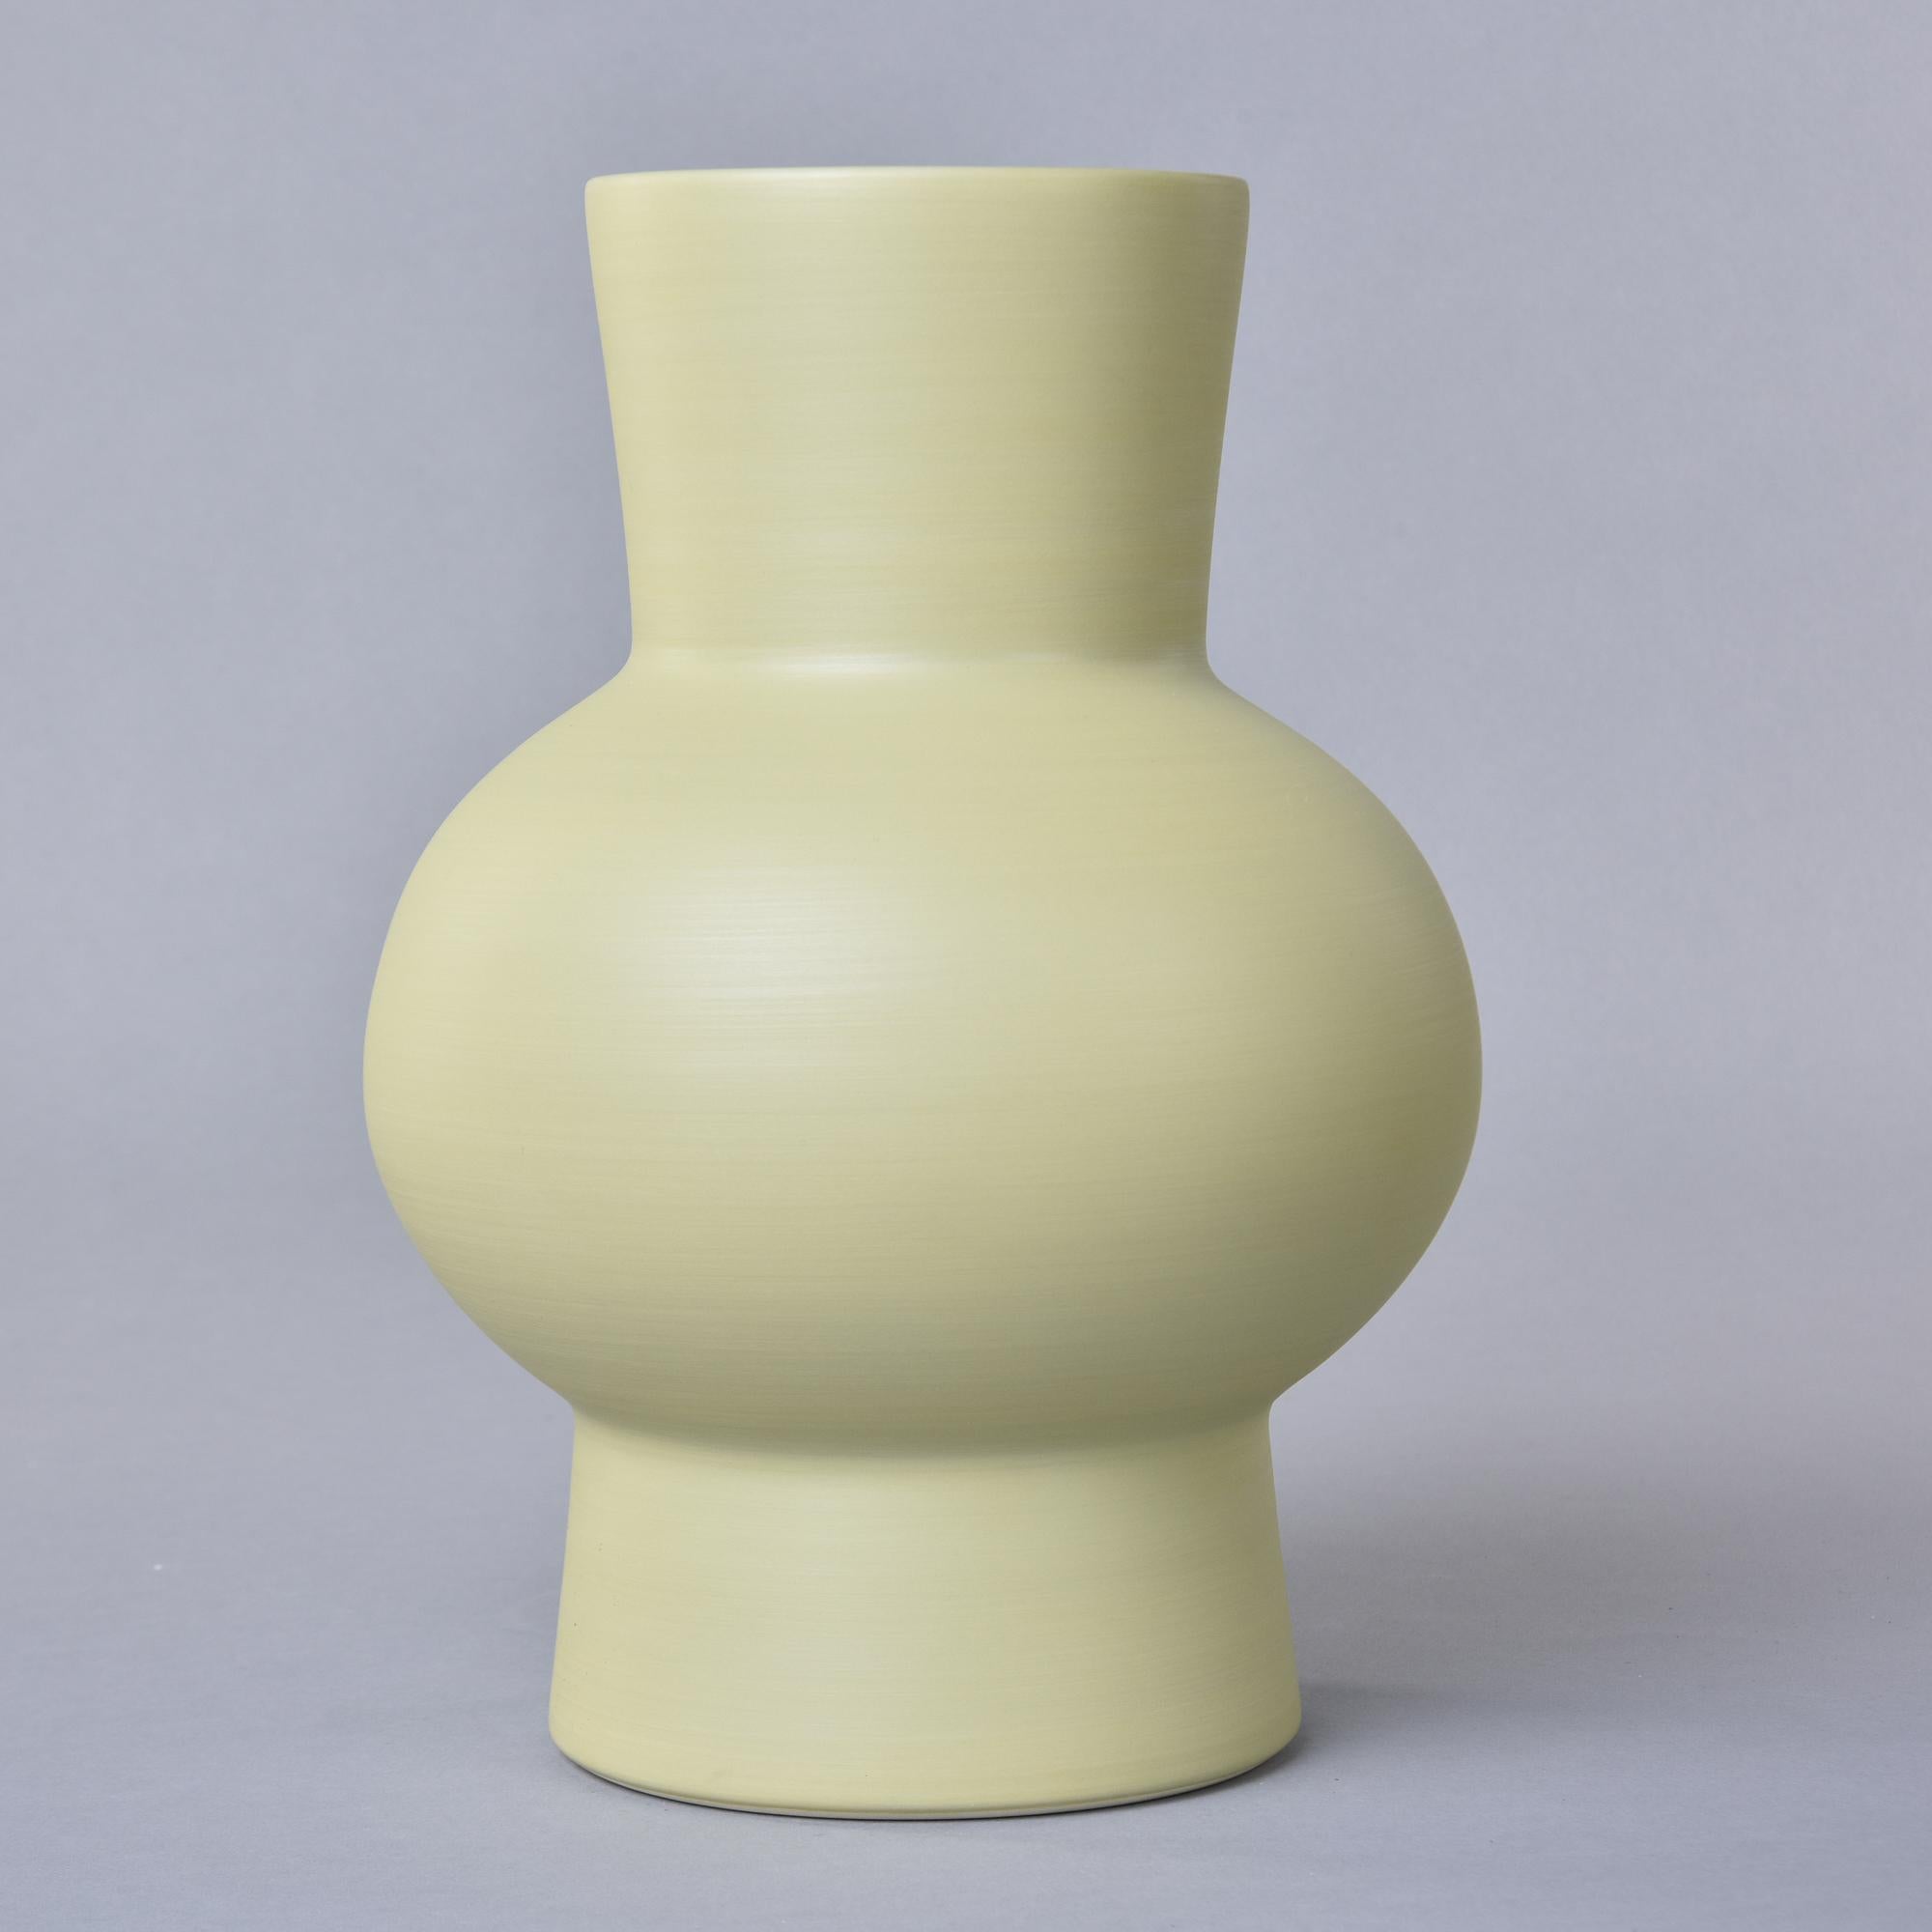 Rina Menardi Royal Princess Vase in Light Pistachio In New Condition For Sale In Troy, MI